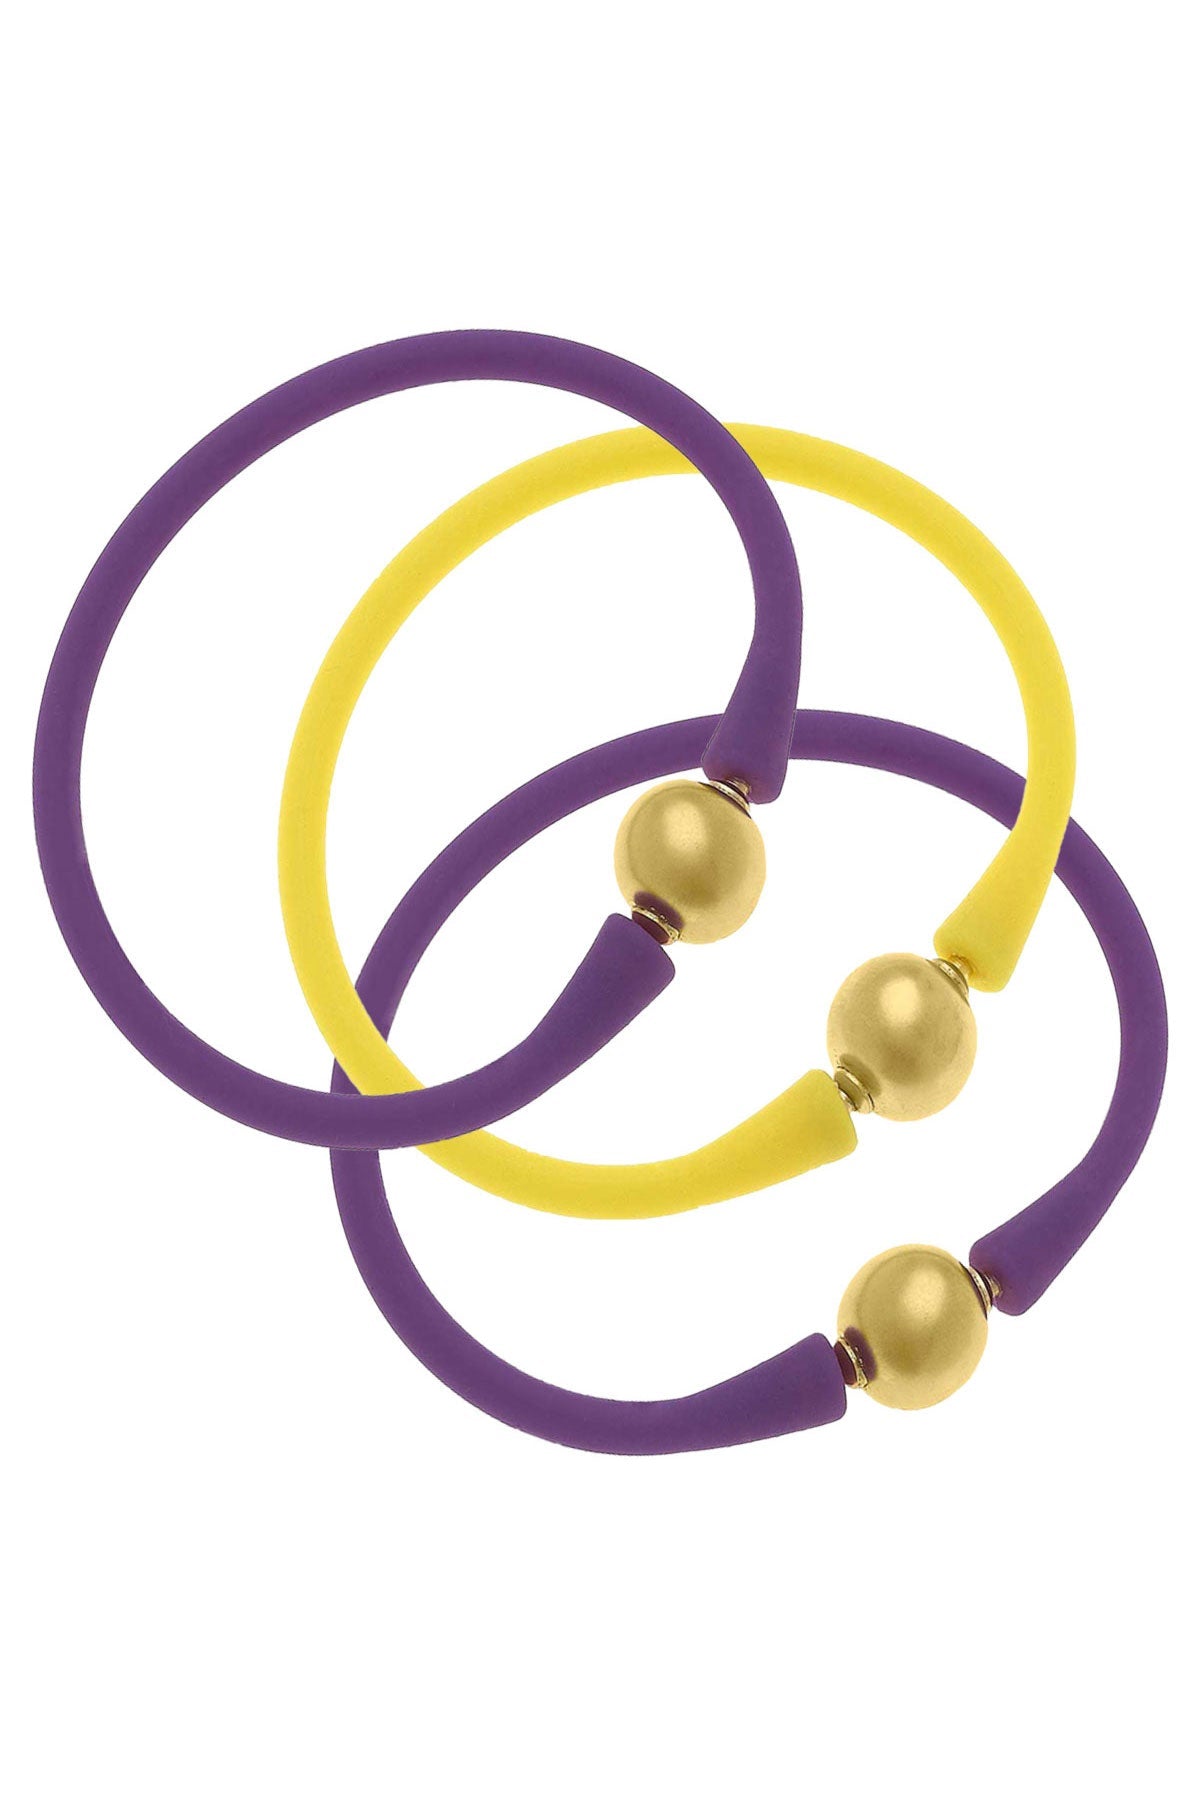 Bali Game Day 24K Gold Bracelet Set of 3 in Purple & Yellow